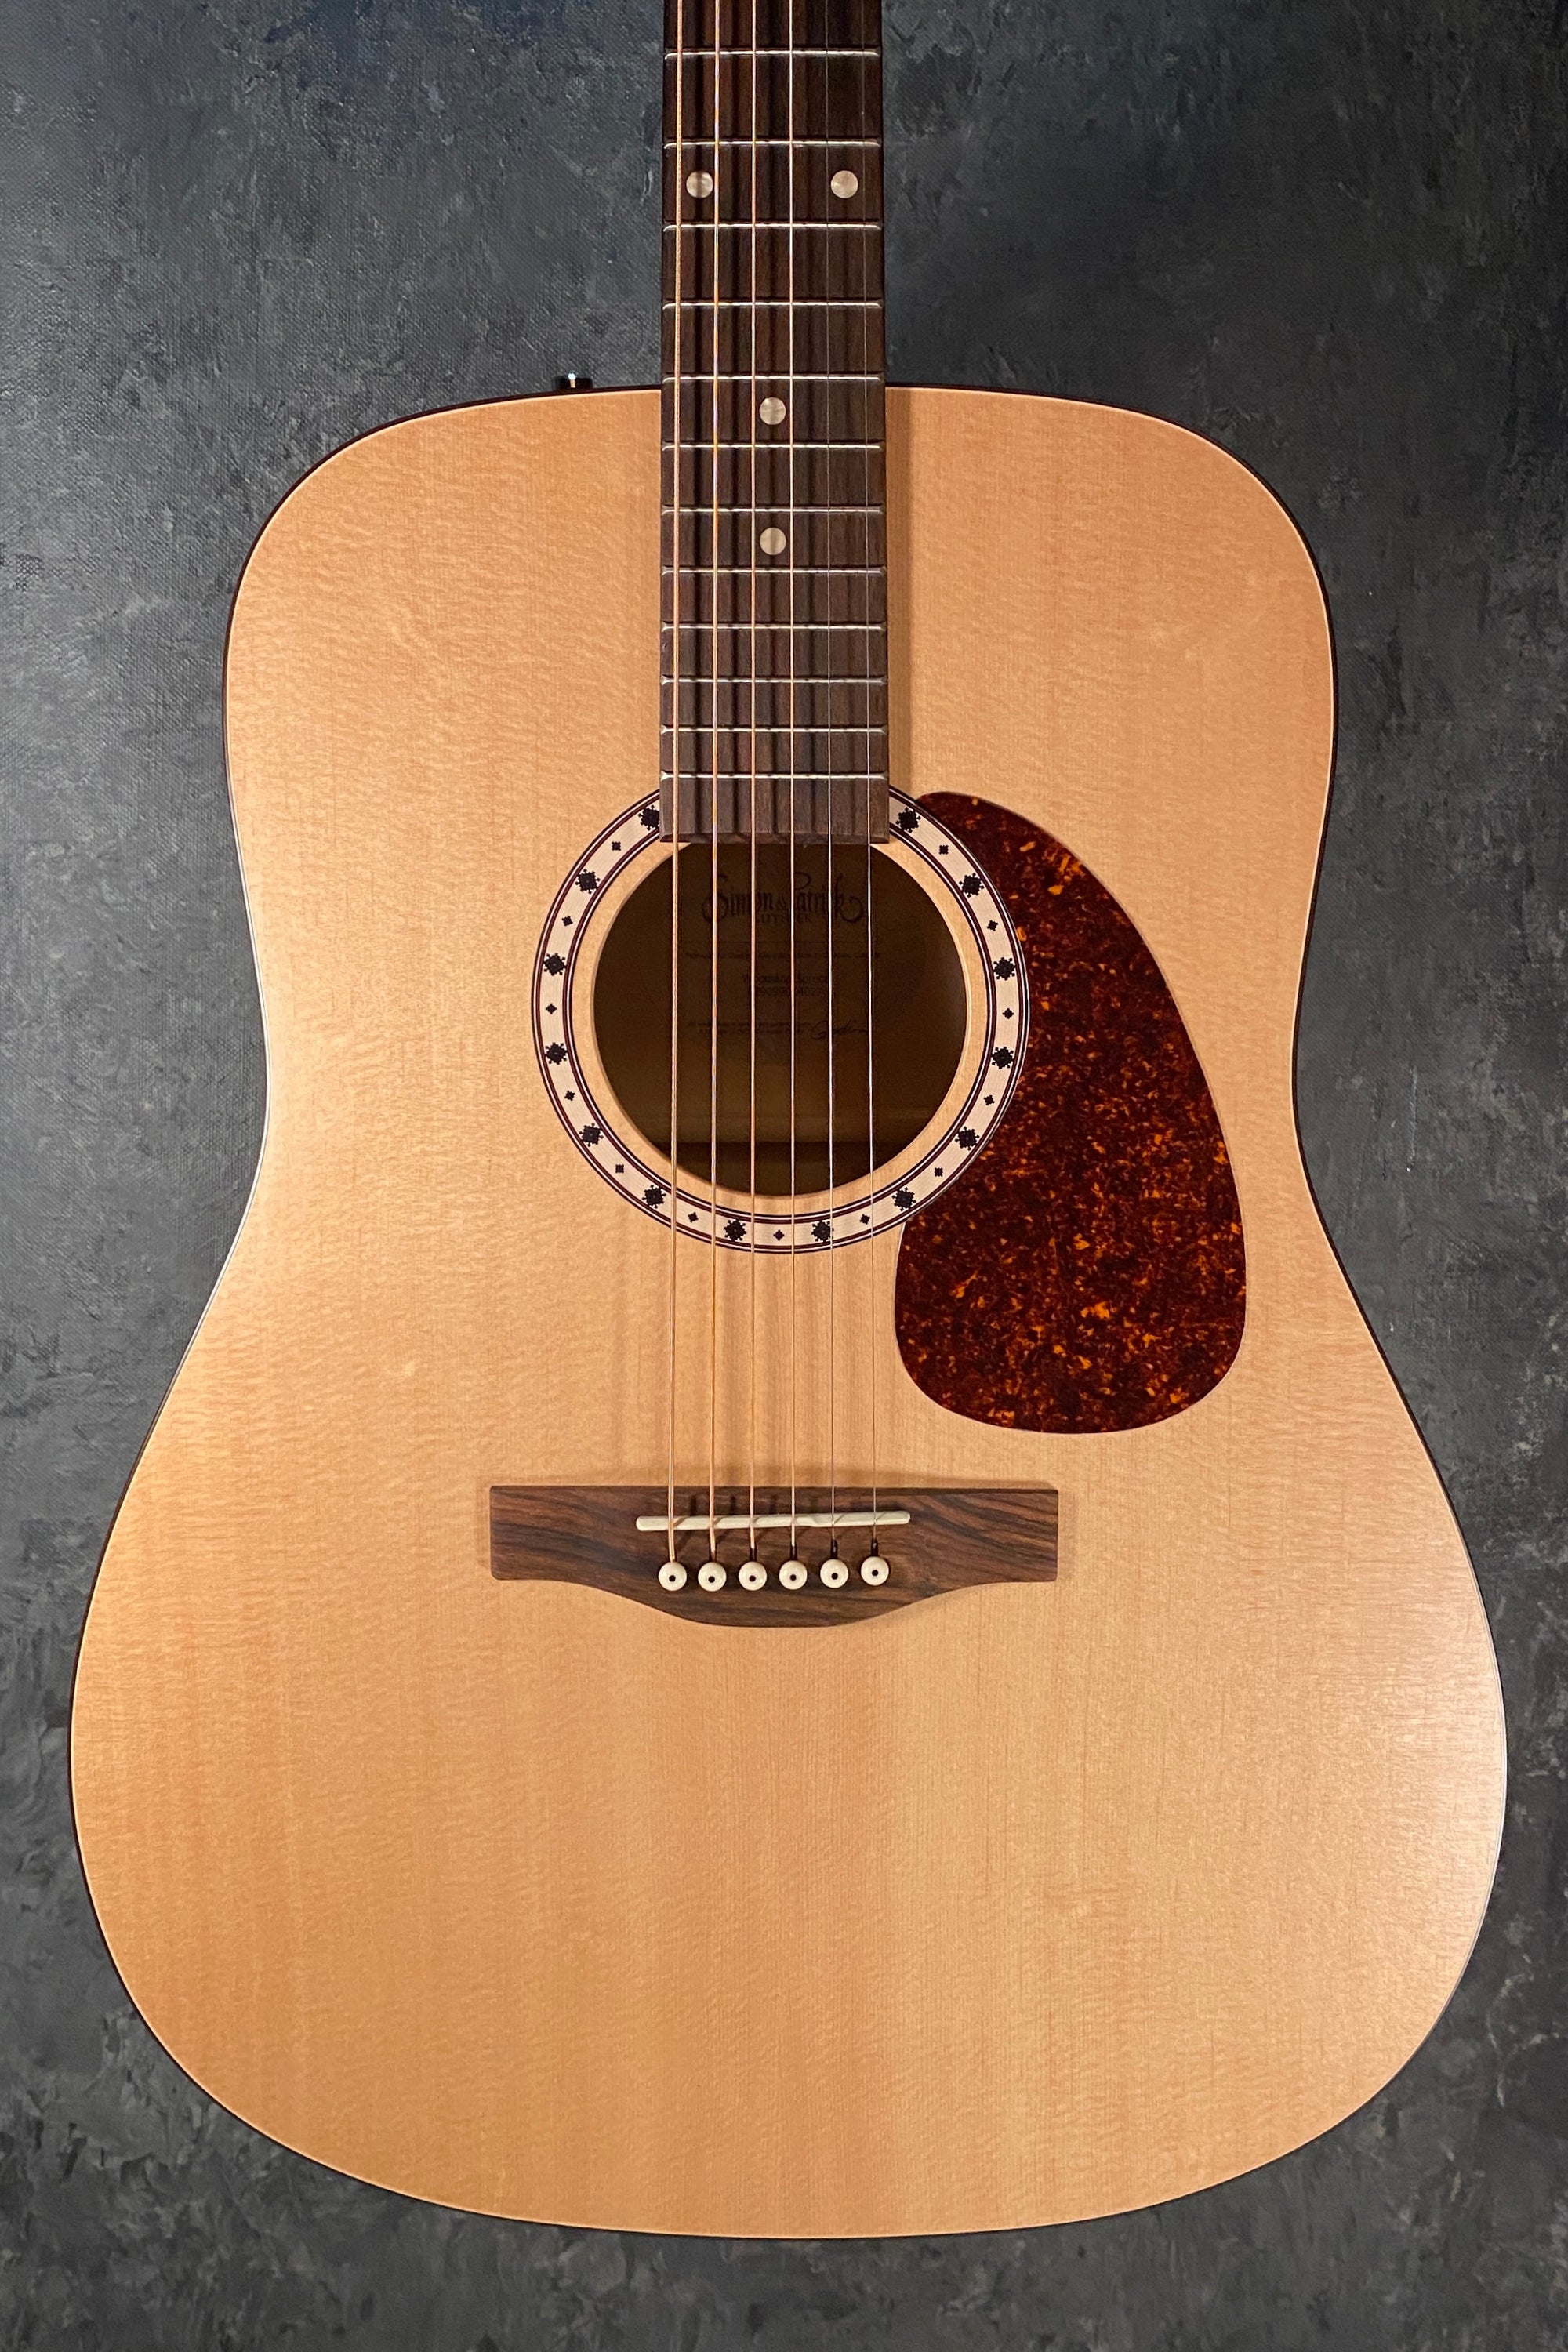 Simon & Patrick 029099 Woodland Pro Spruce Acoustic 6 String Guitar